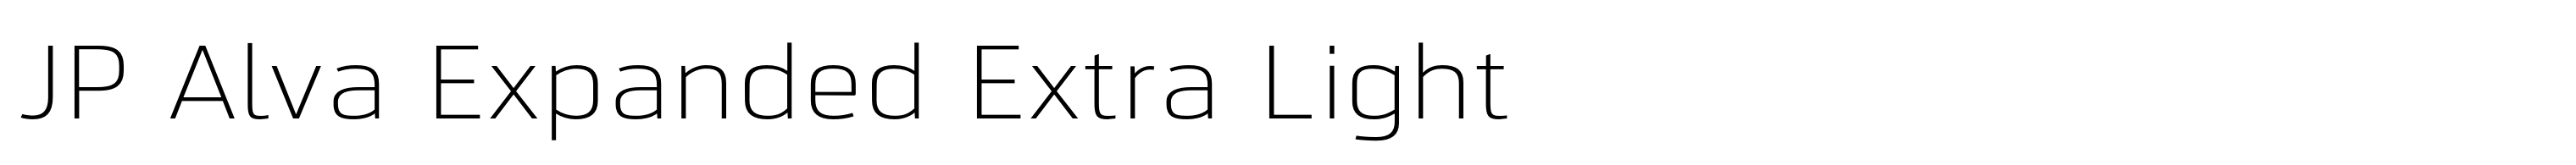 JP Alva Expanded Extra Light